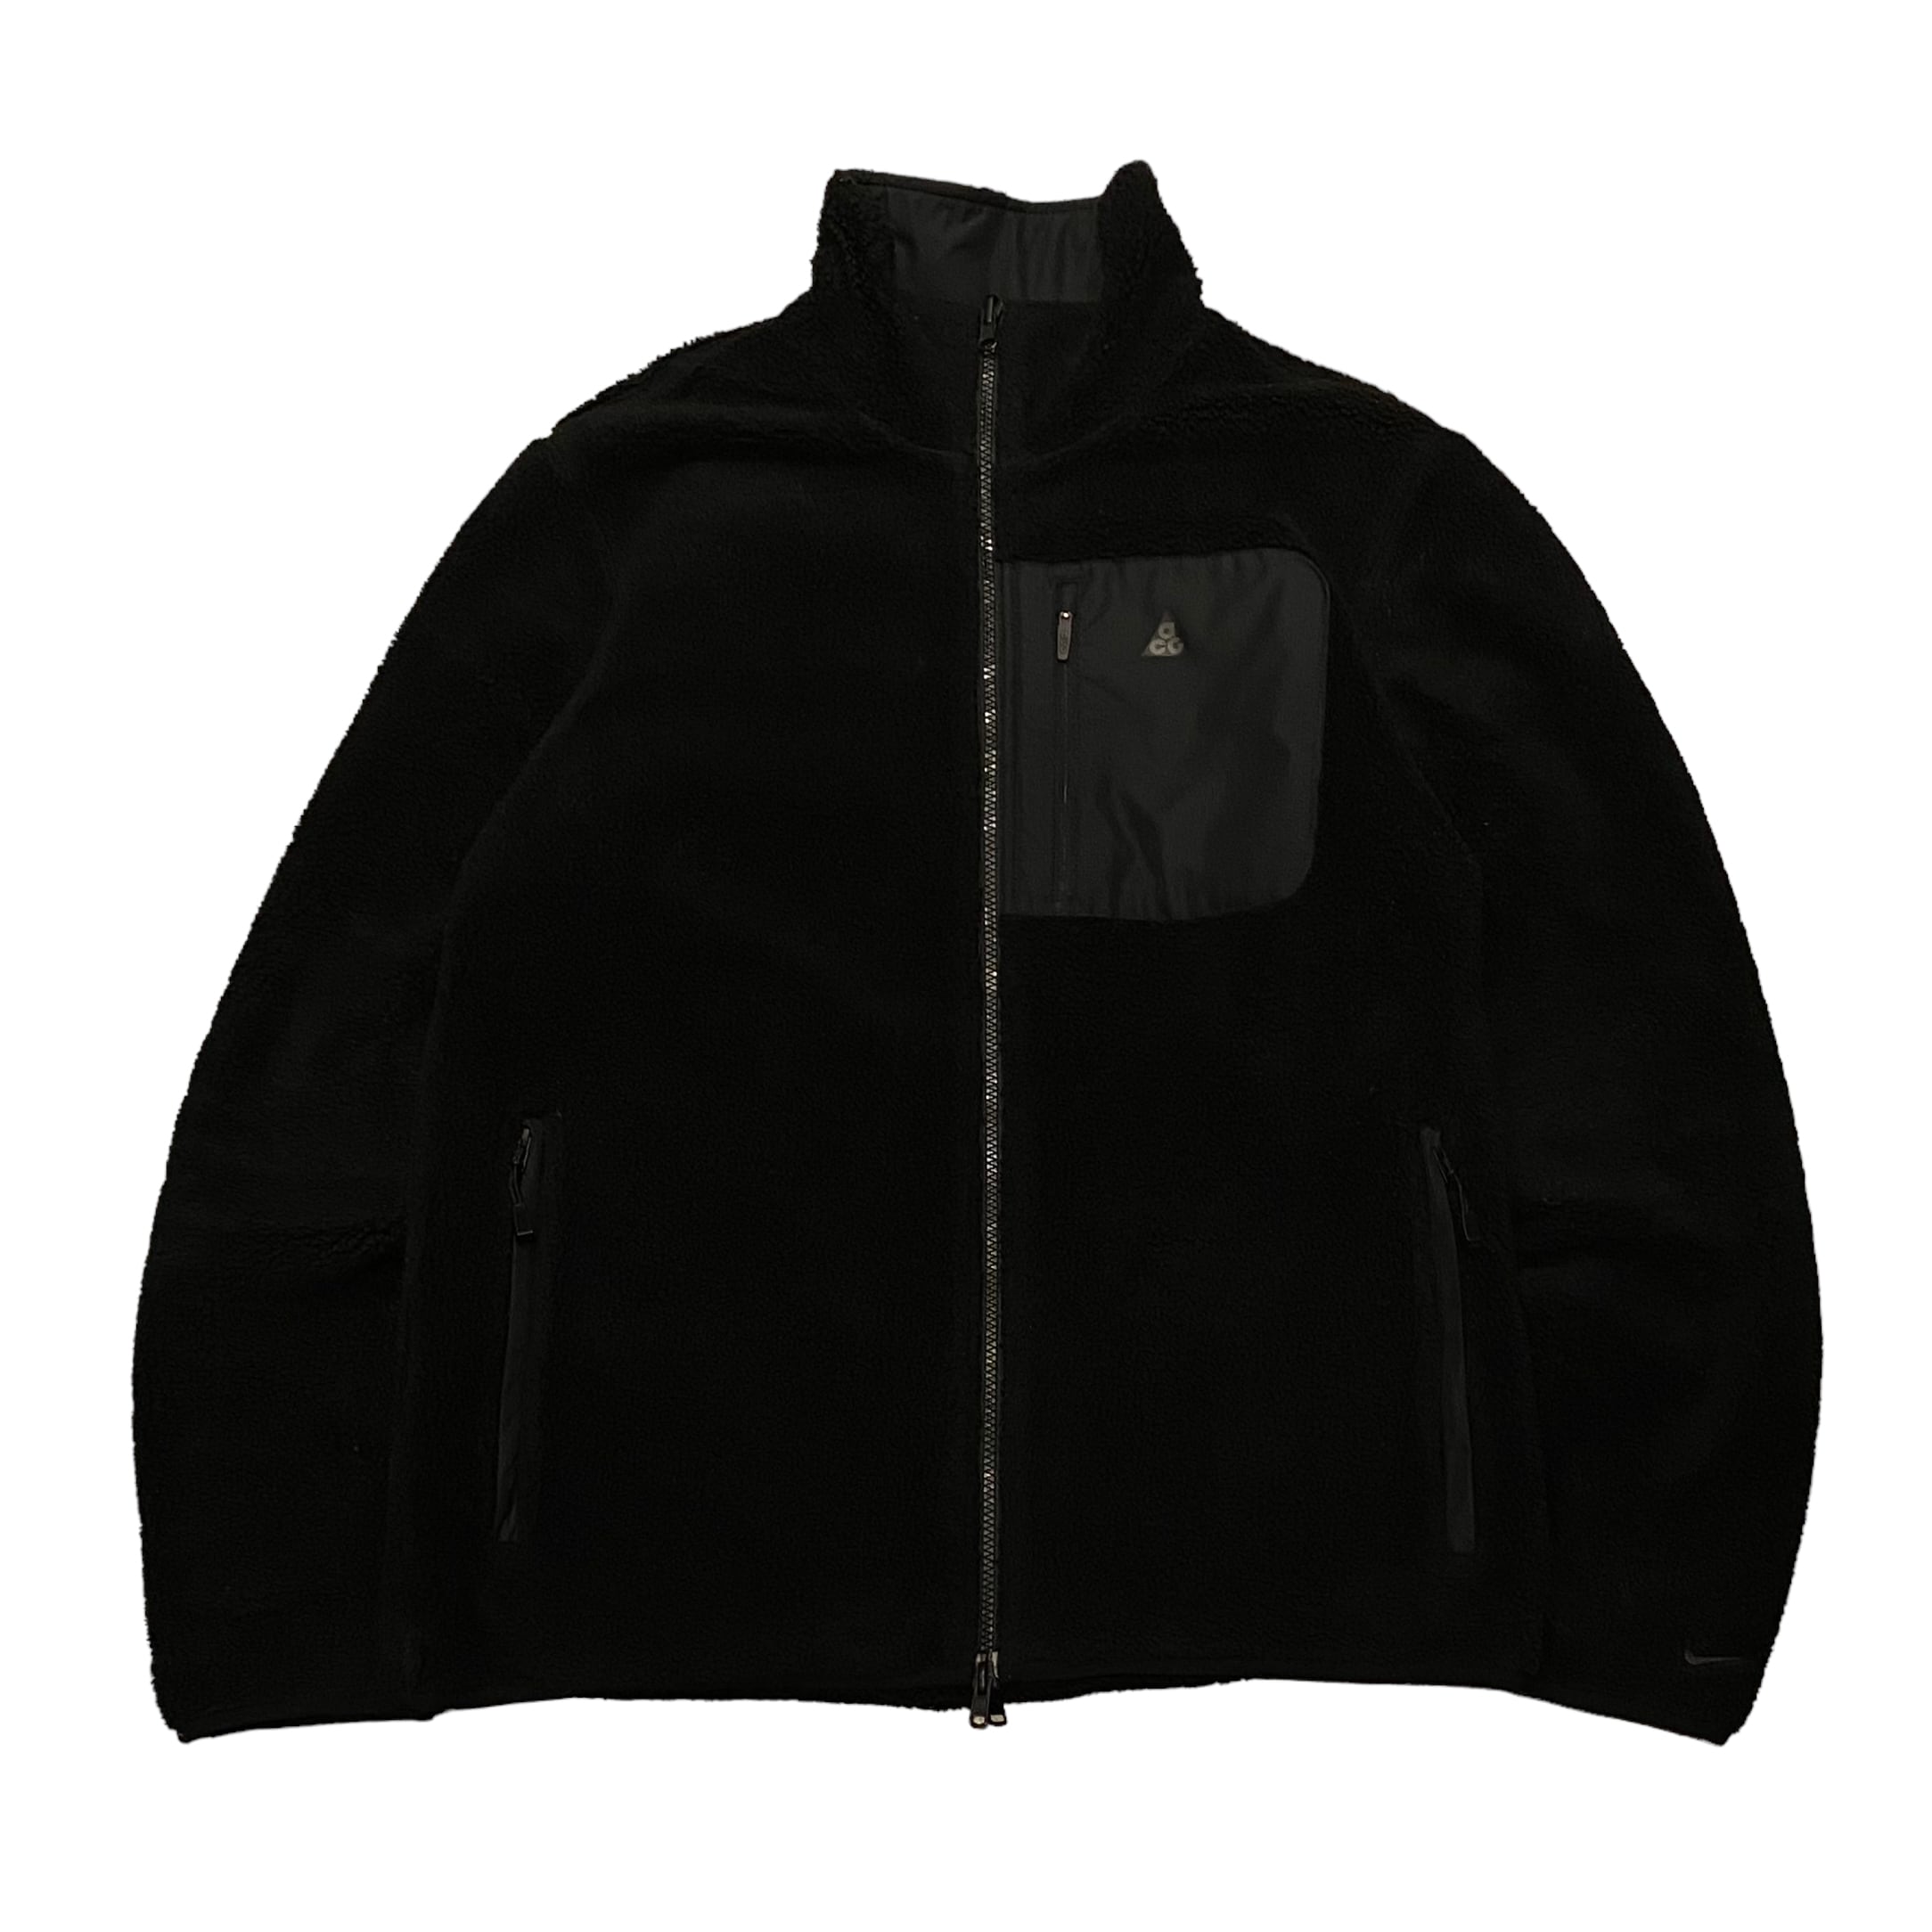 NIKE ACG fleece jacket フリースジャケット 黒 black